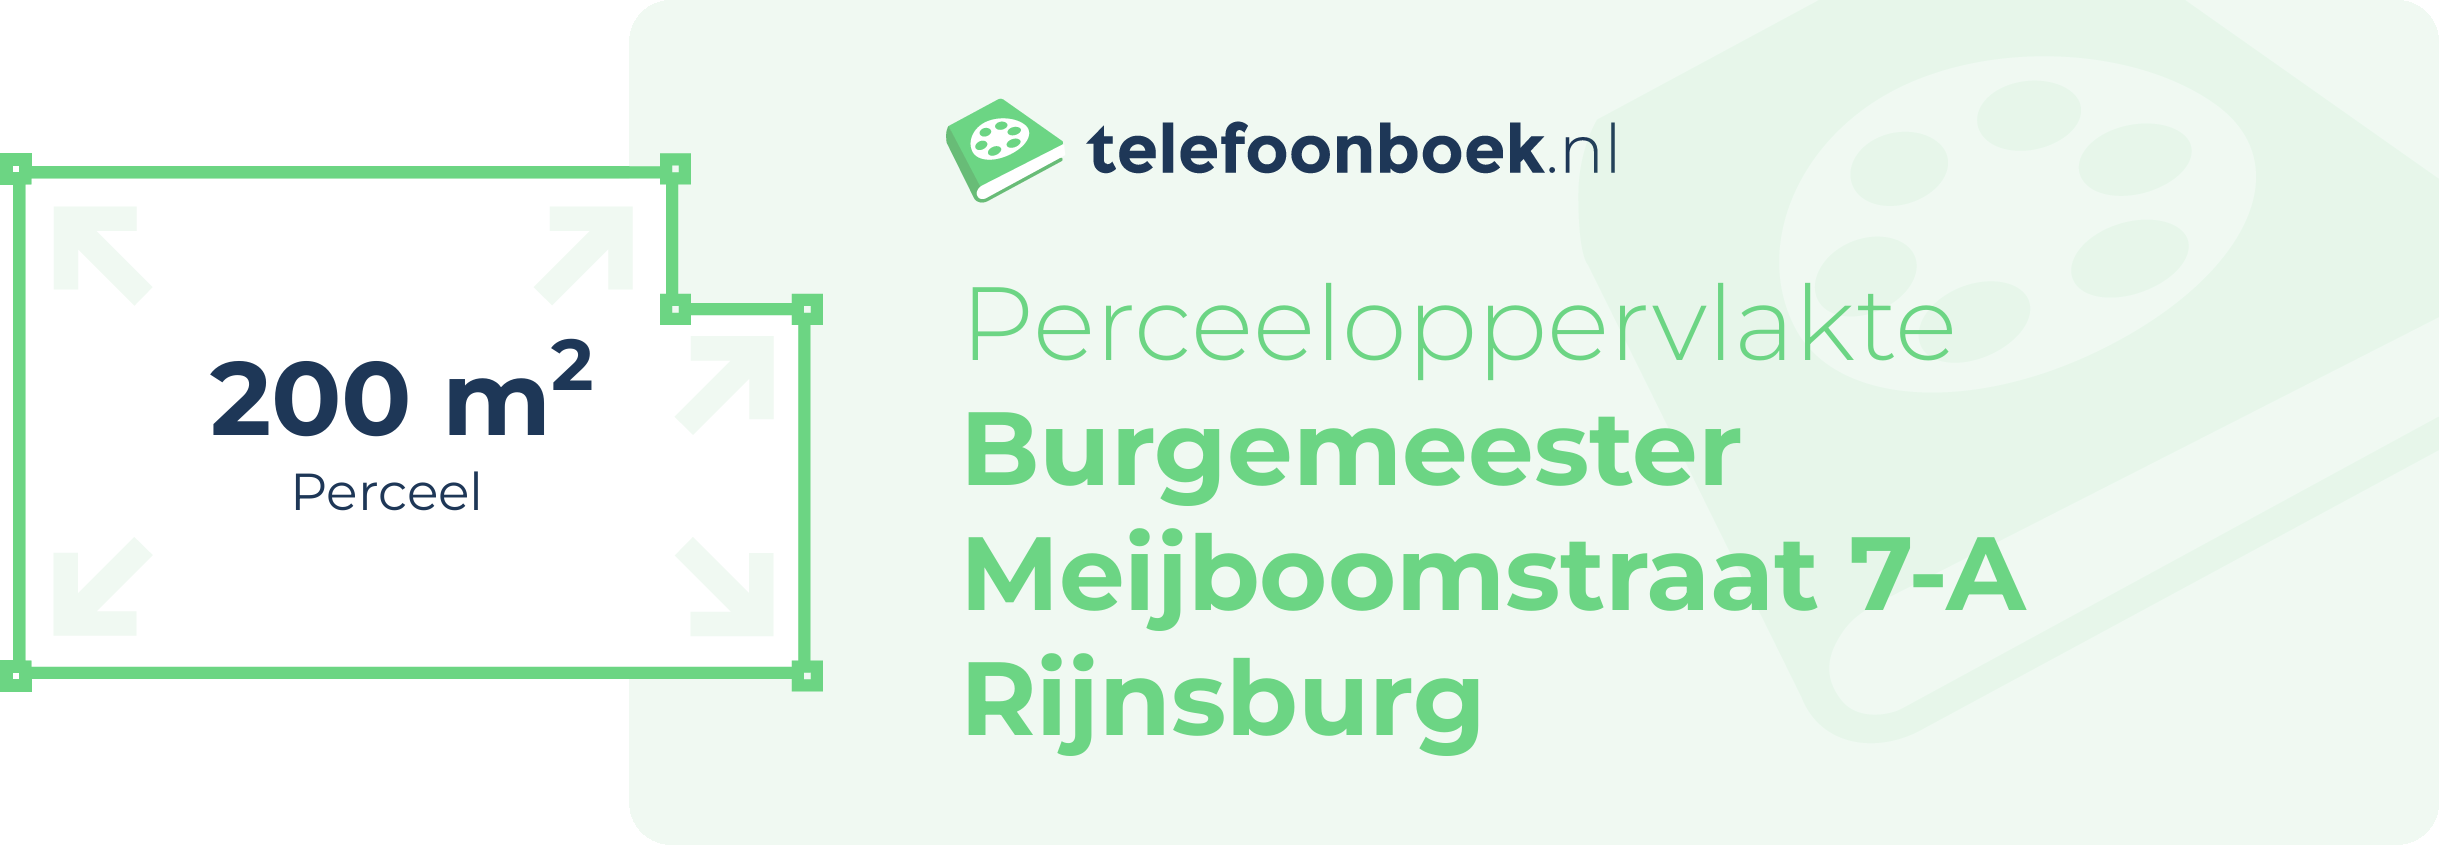 Perceeloppervlakte Burgemeester Meijboomstraat 7-A Rijnsburg